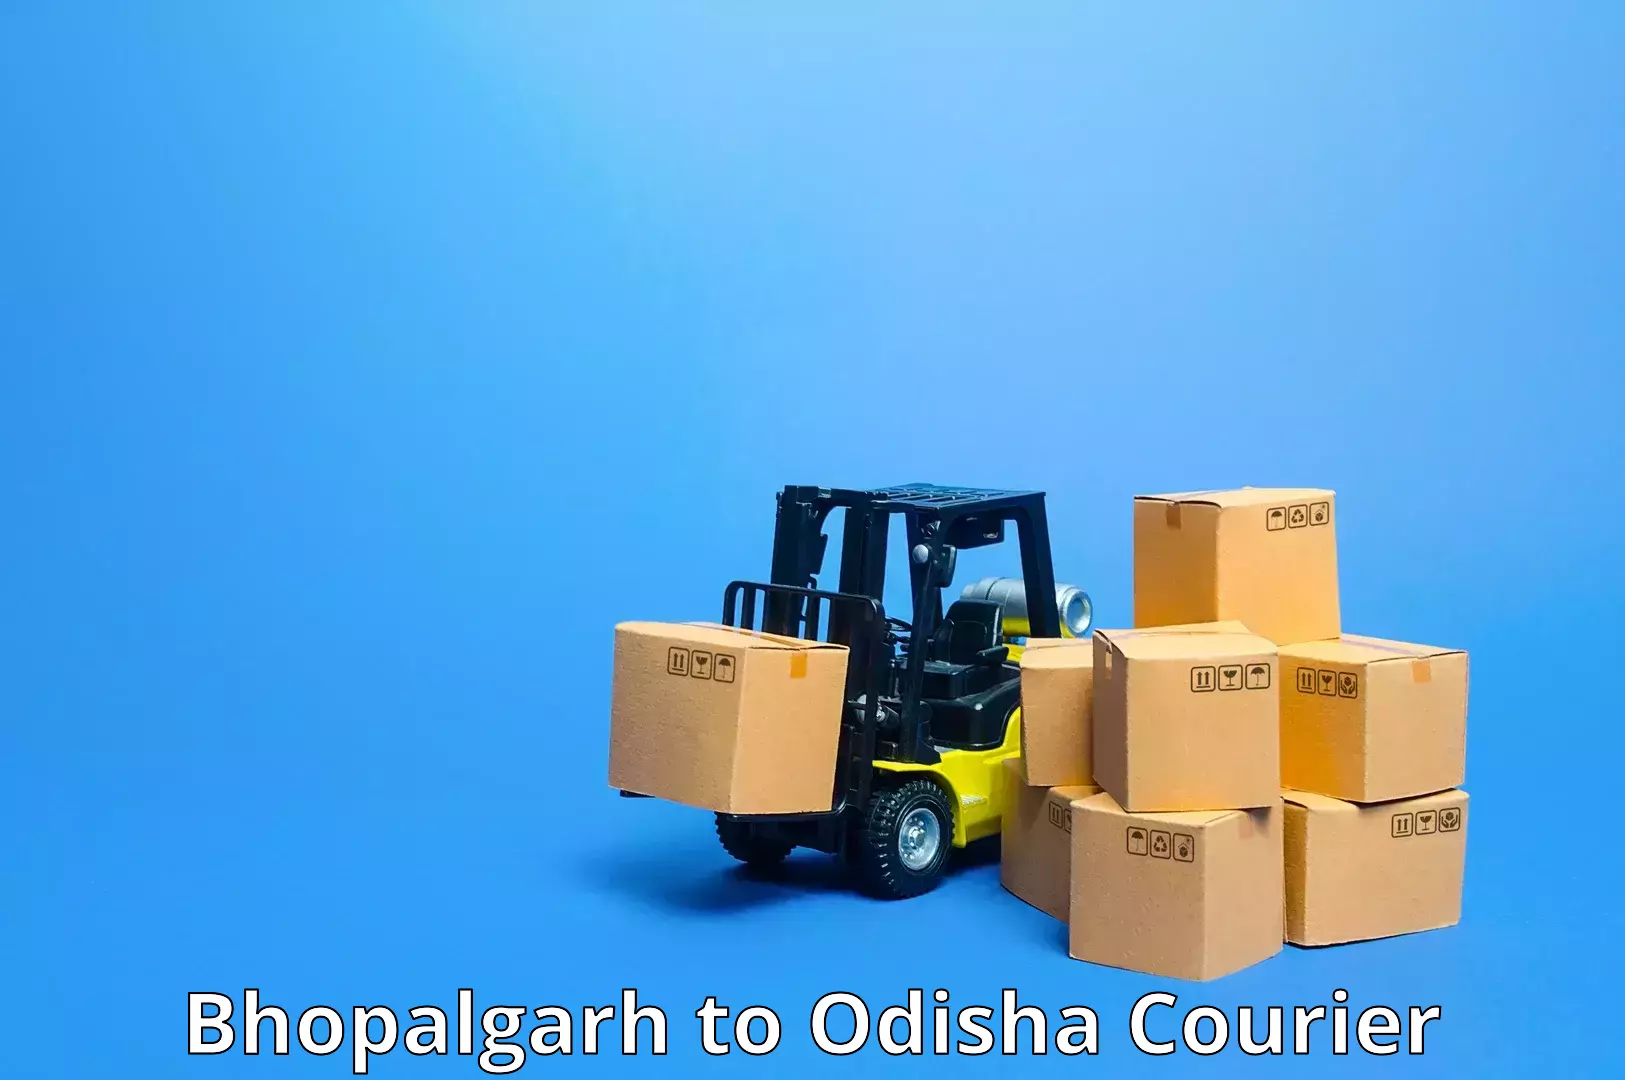 Optimized shipping routes in Bhopalgarh to Baisinga